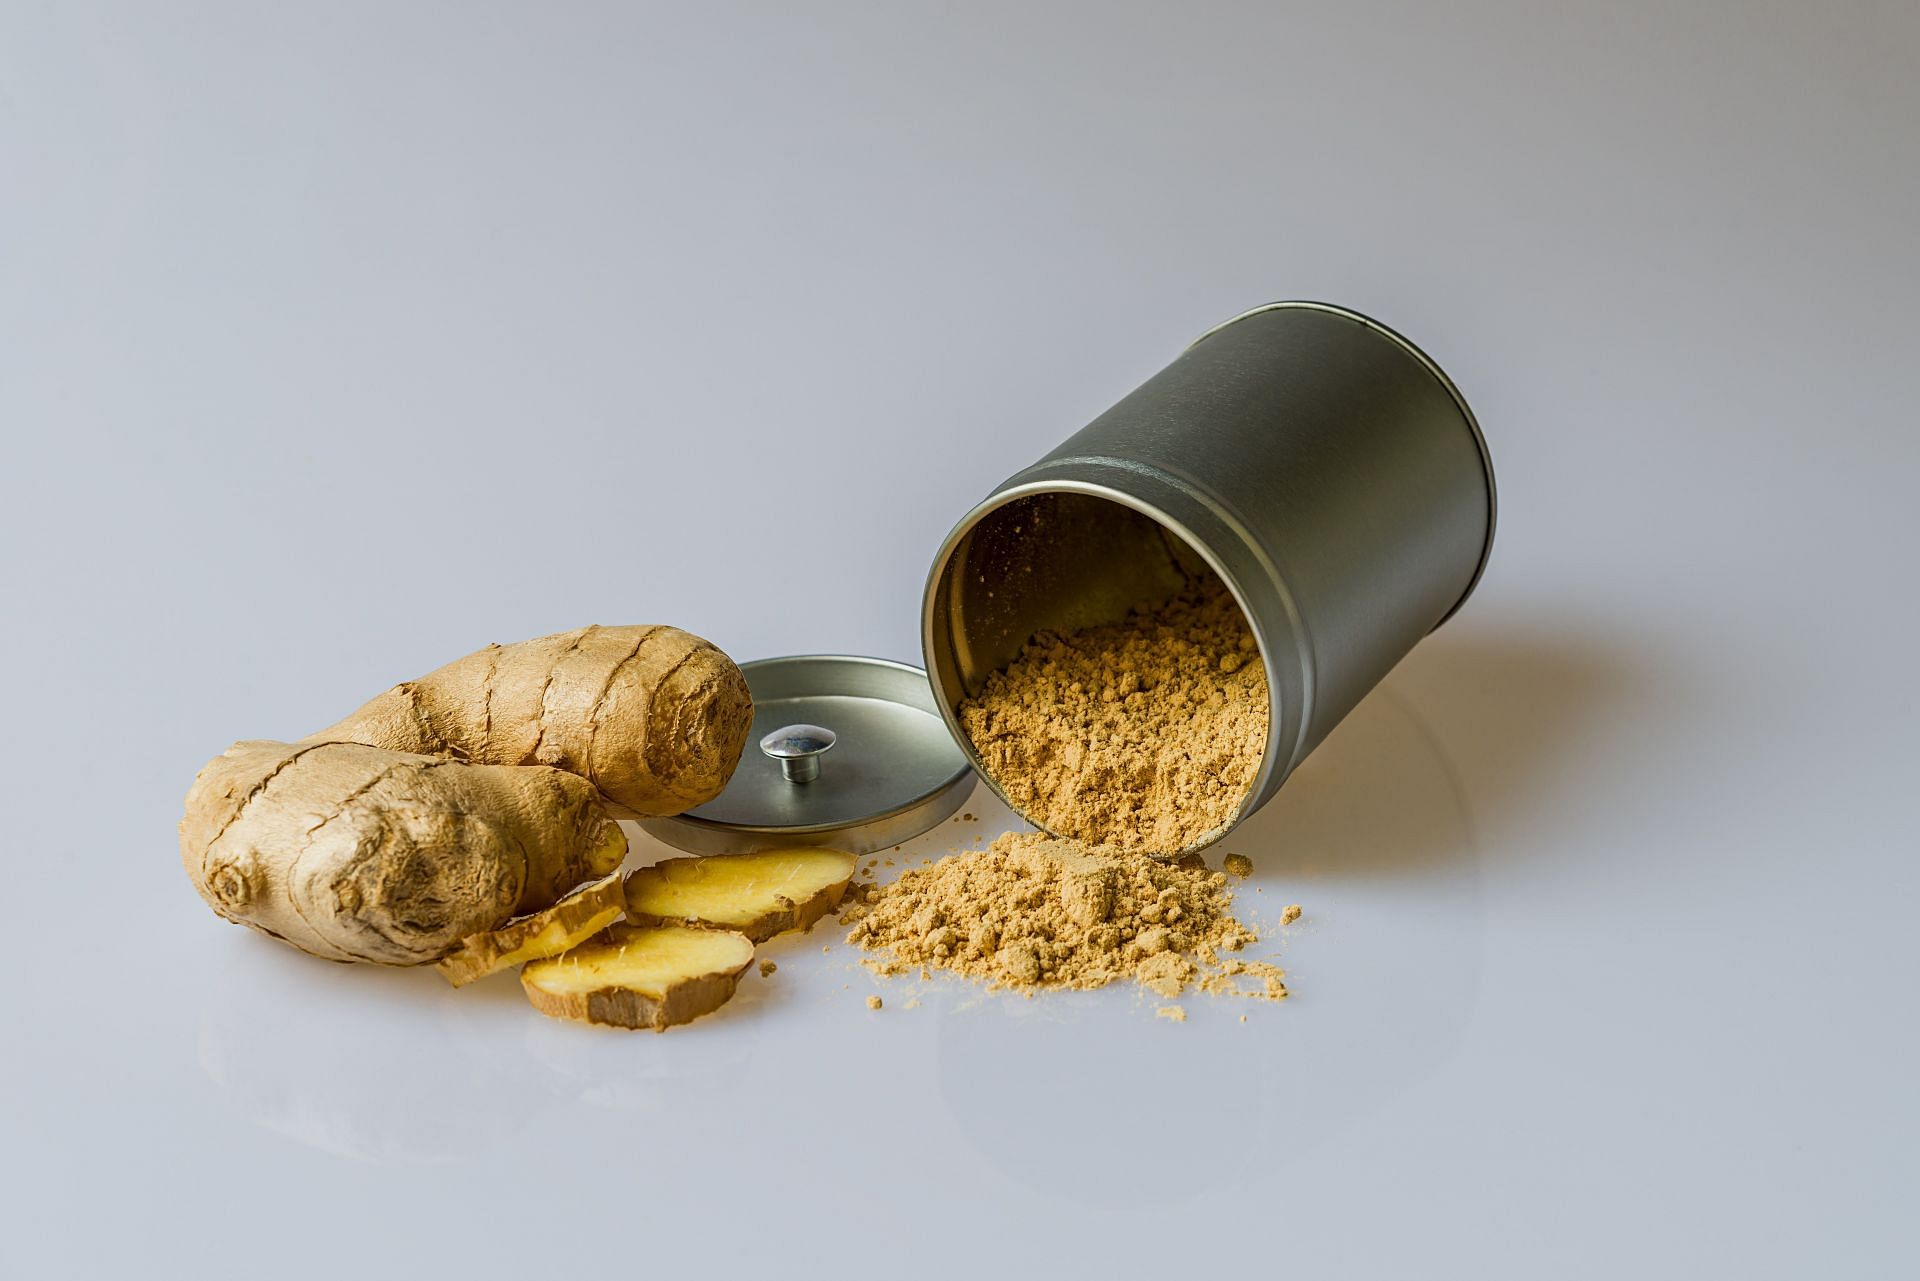 Does ginger ale help with nausea? (Image via Pexels/Pixabay)